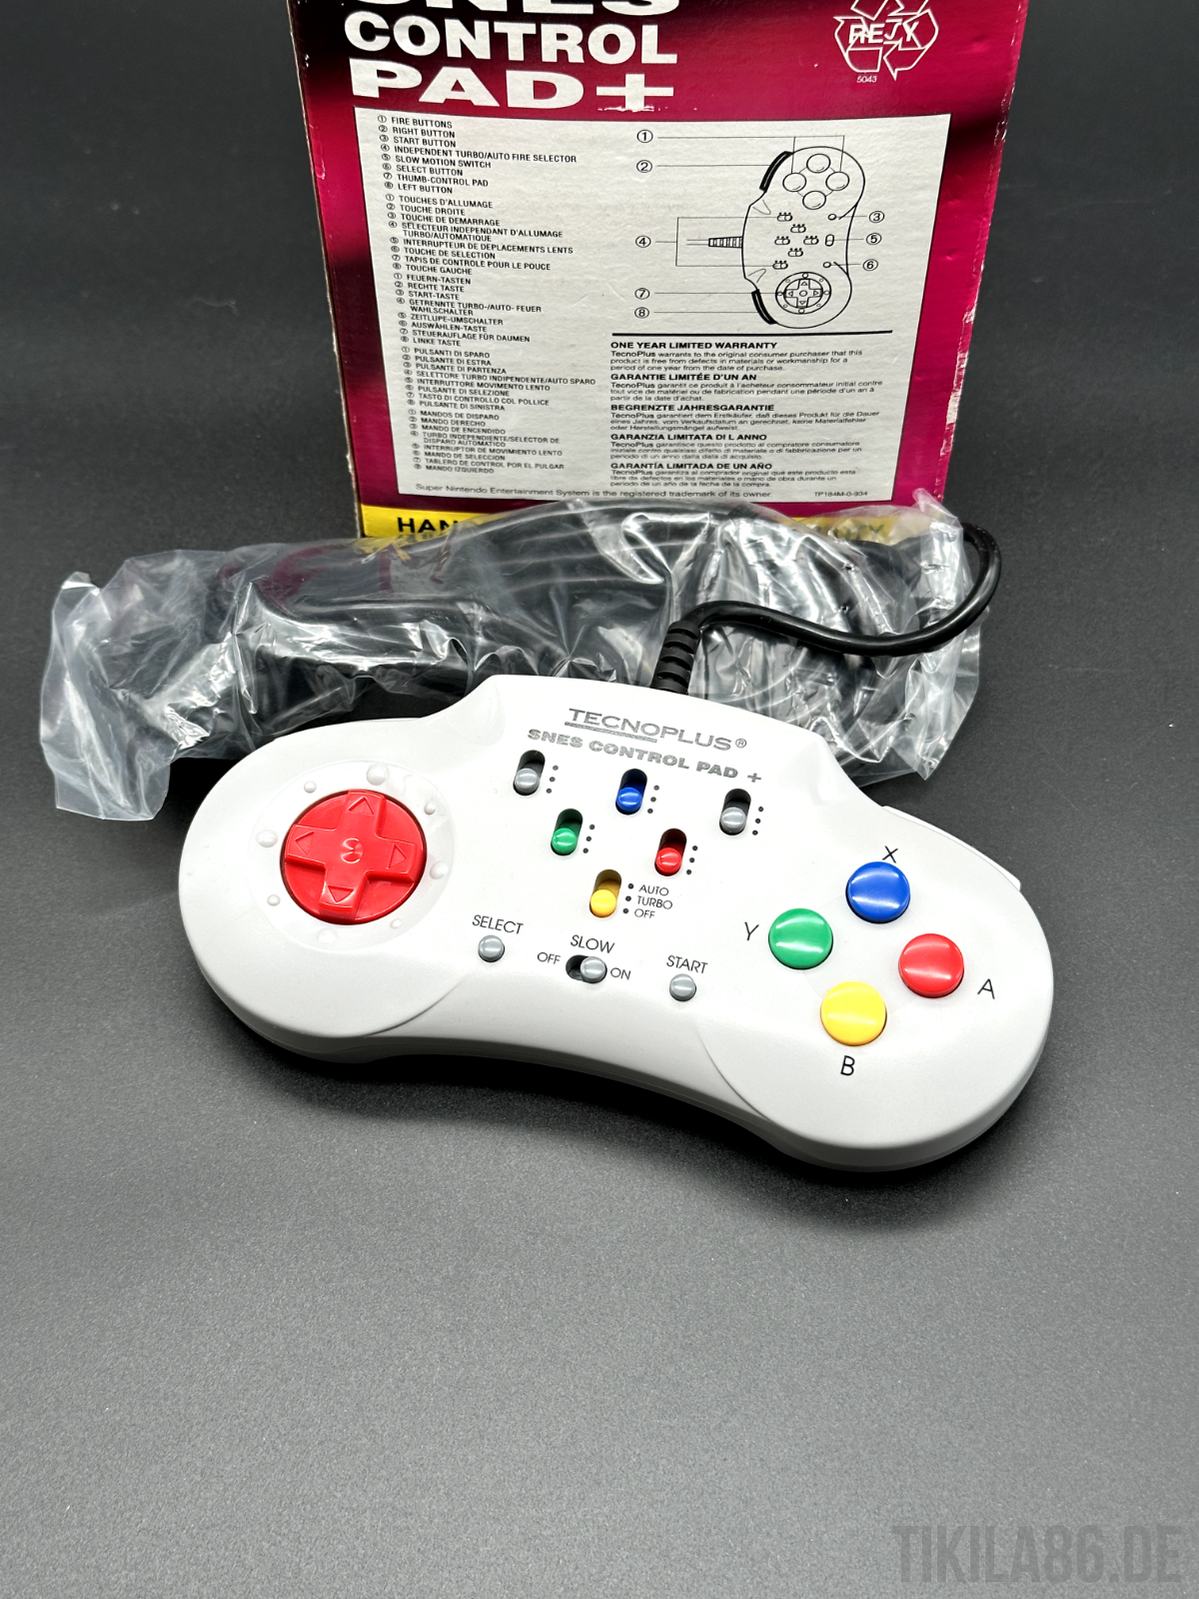 Nintendo SNES Tecno Plus Controller / SNES Controll Pad OVP